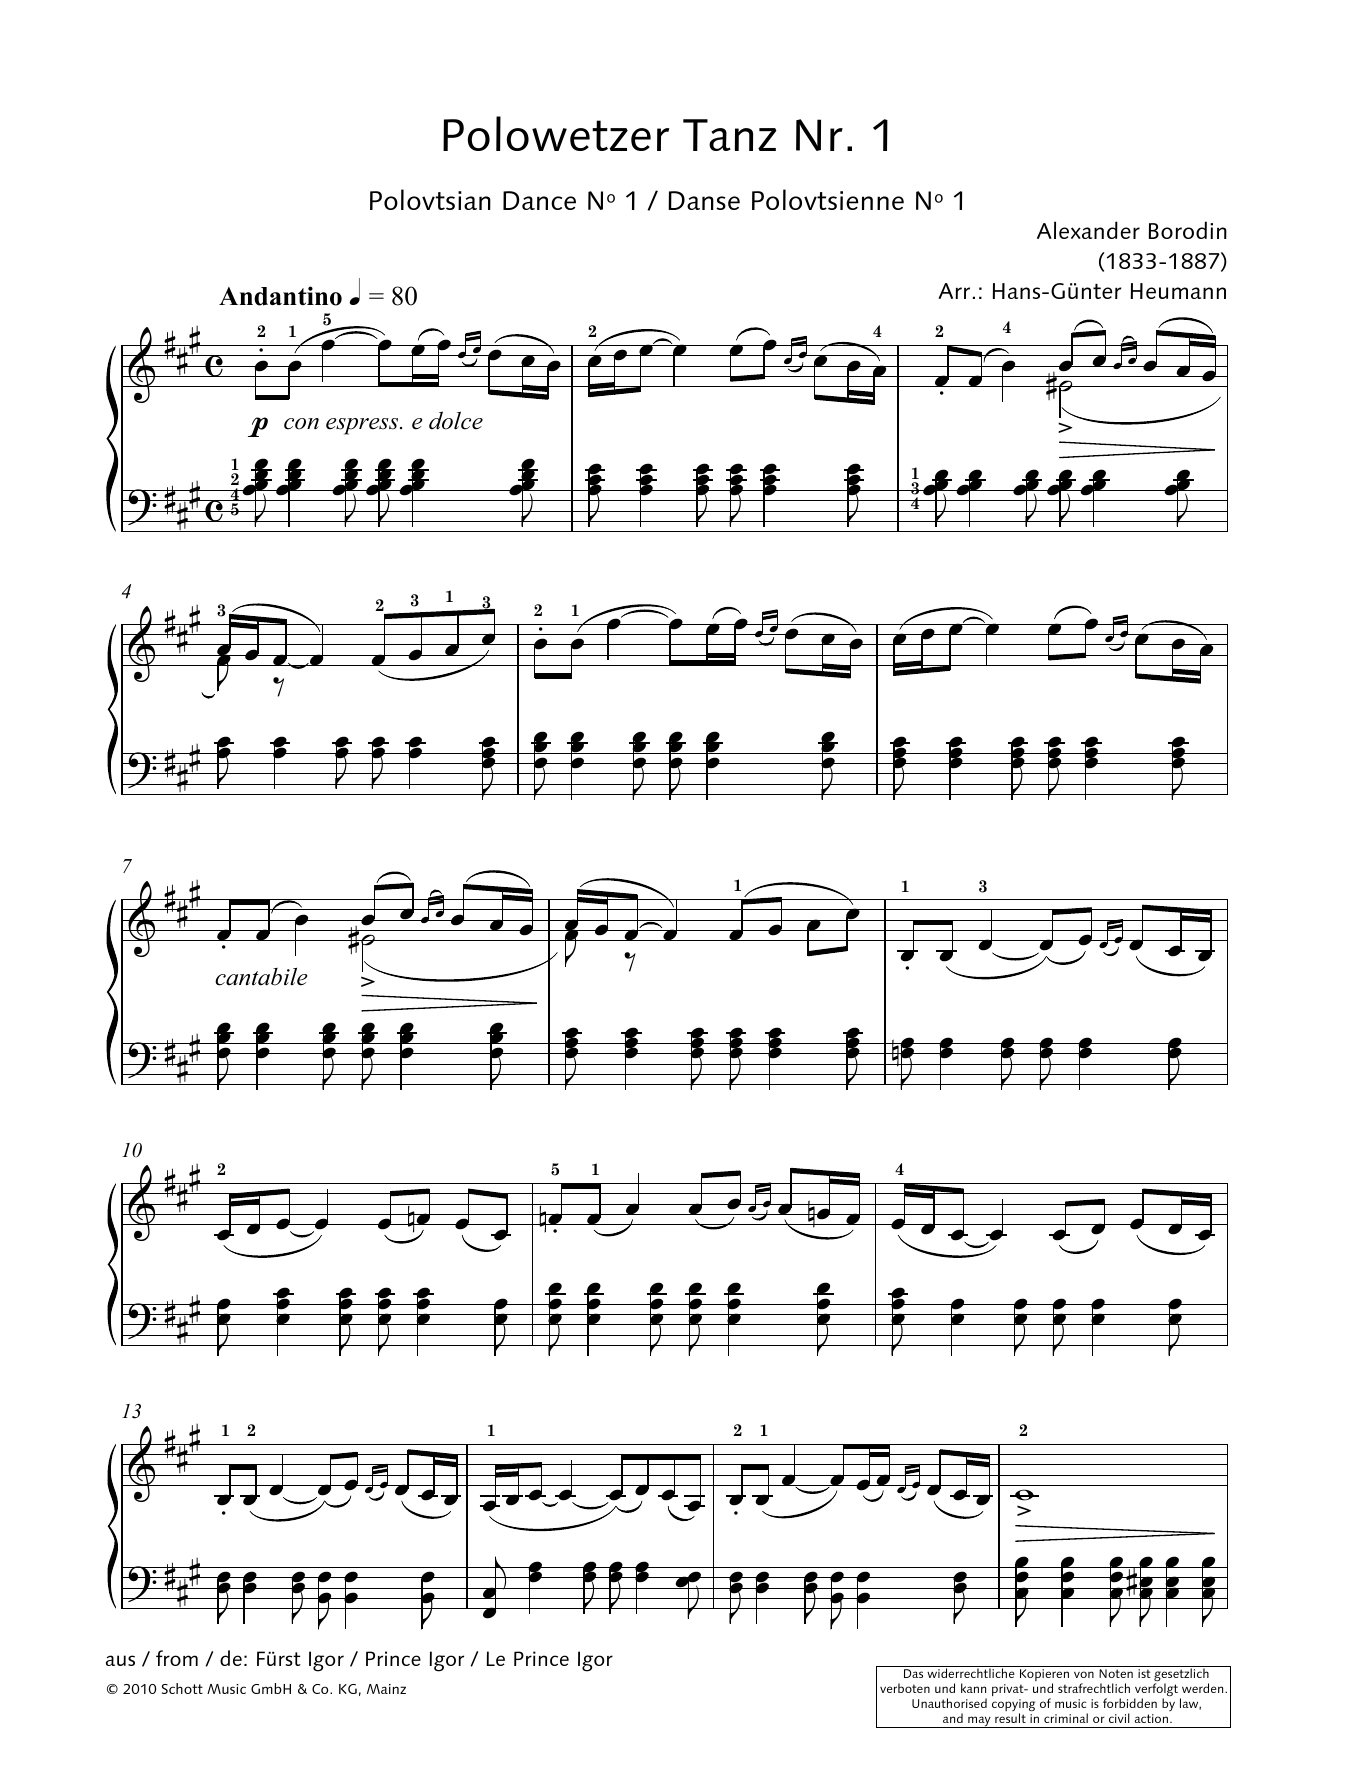 Hans-Gunter Heumann Polovtsian Dance No. 1 sheet music notes and chords arranged for Piano Solo